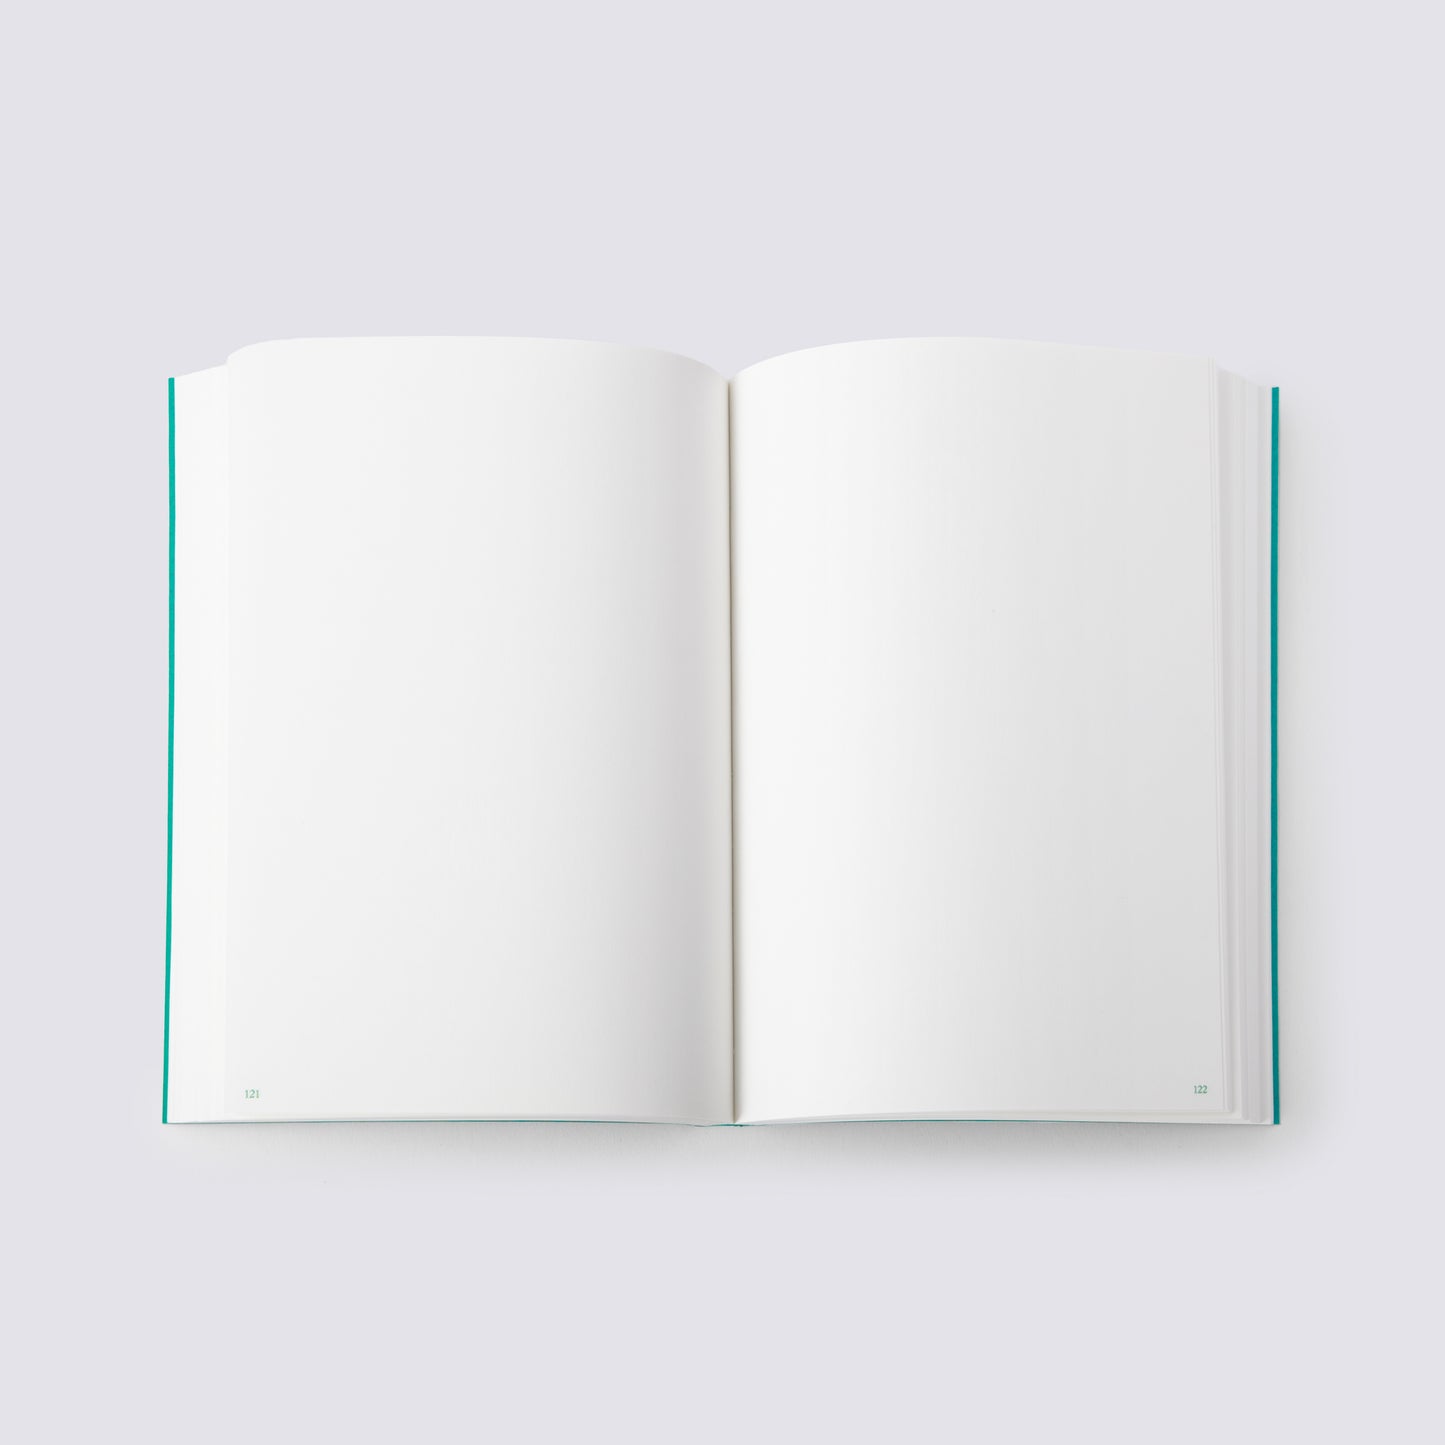 Ultimate Stationery Stash - Limoncello / Plain Paper